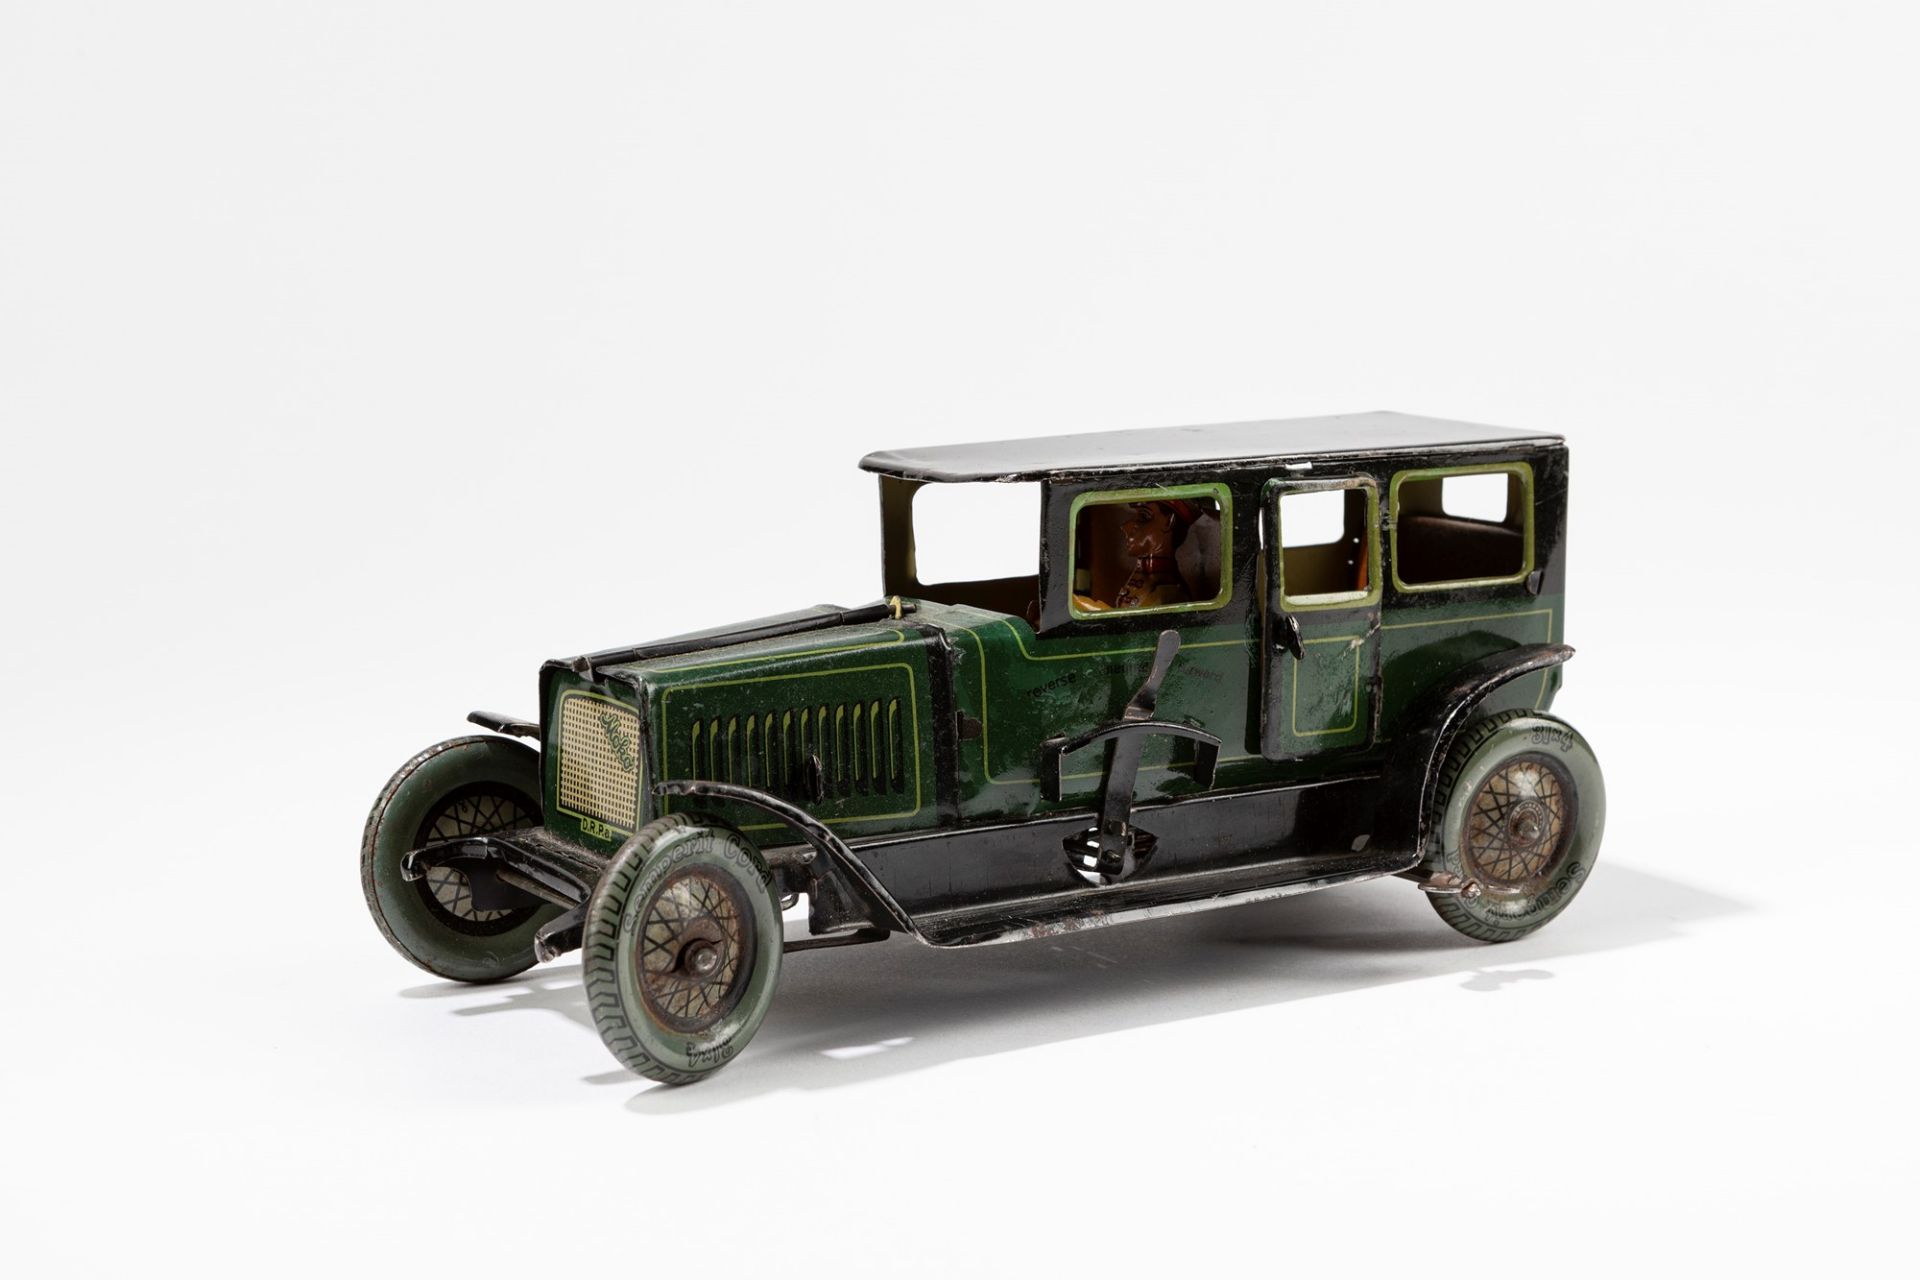 Moko - Limousine car, 1920-1925